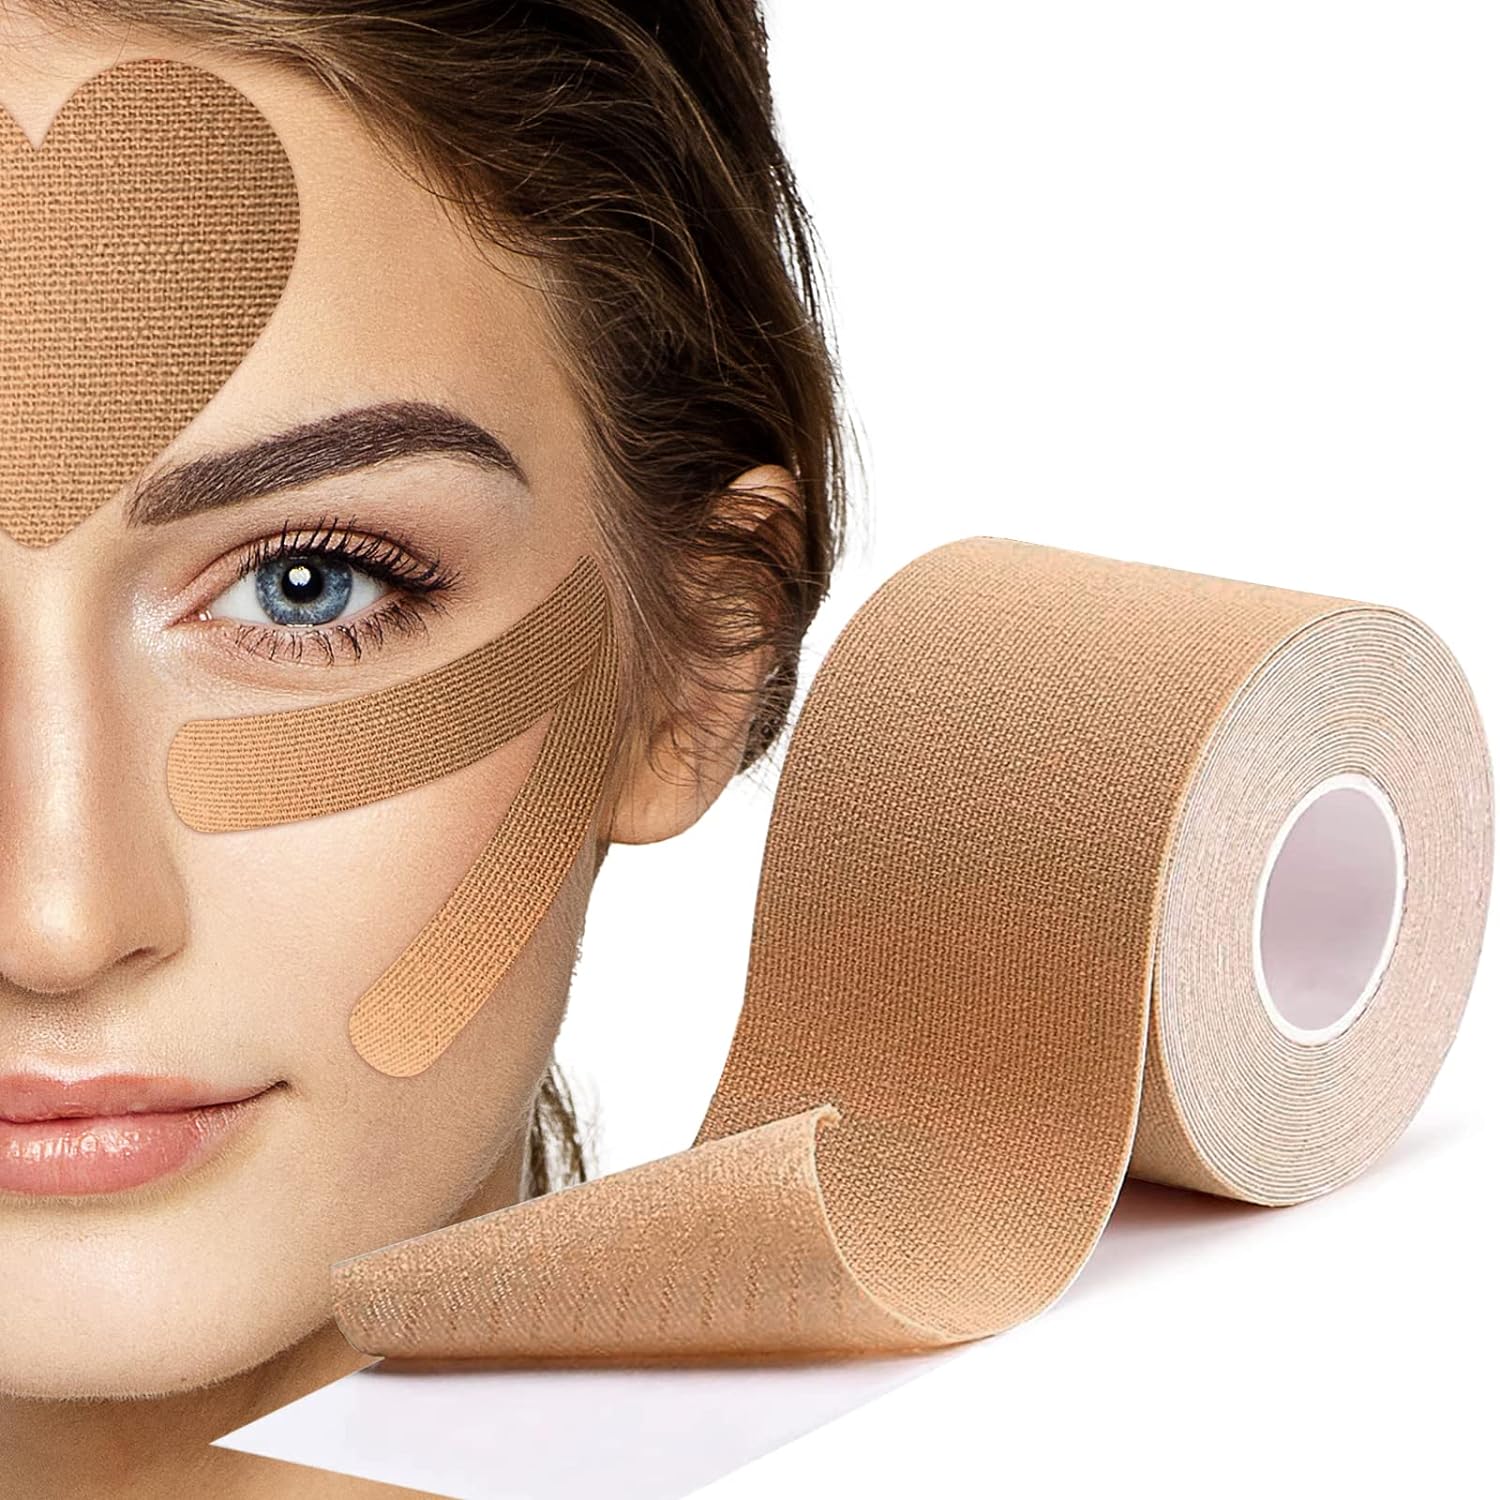 Anti-Wrinkle Tape Facial Myofascial Lift Tape 2.5CM x 5M,2 Rolls